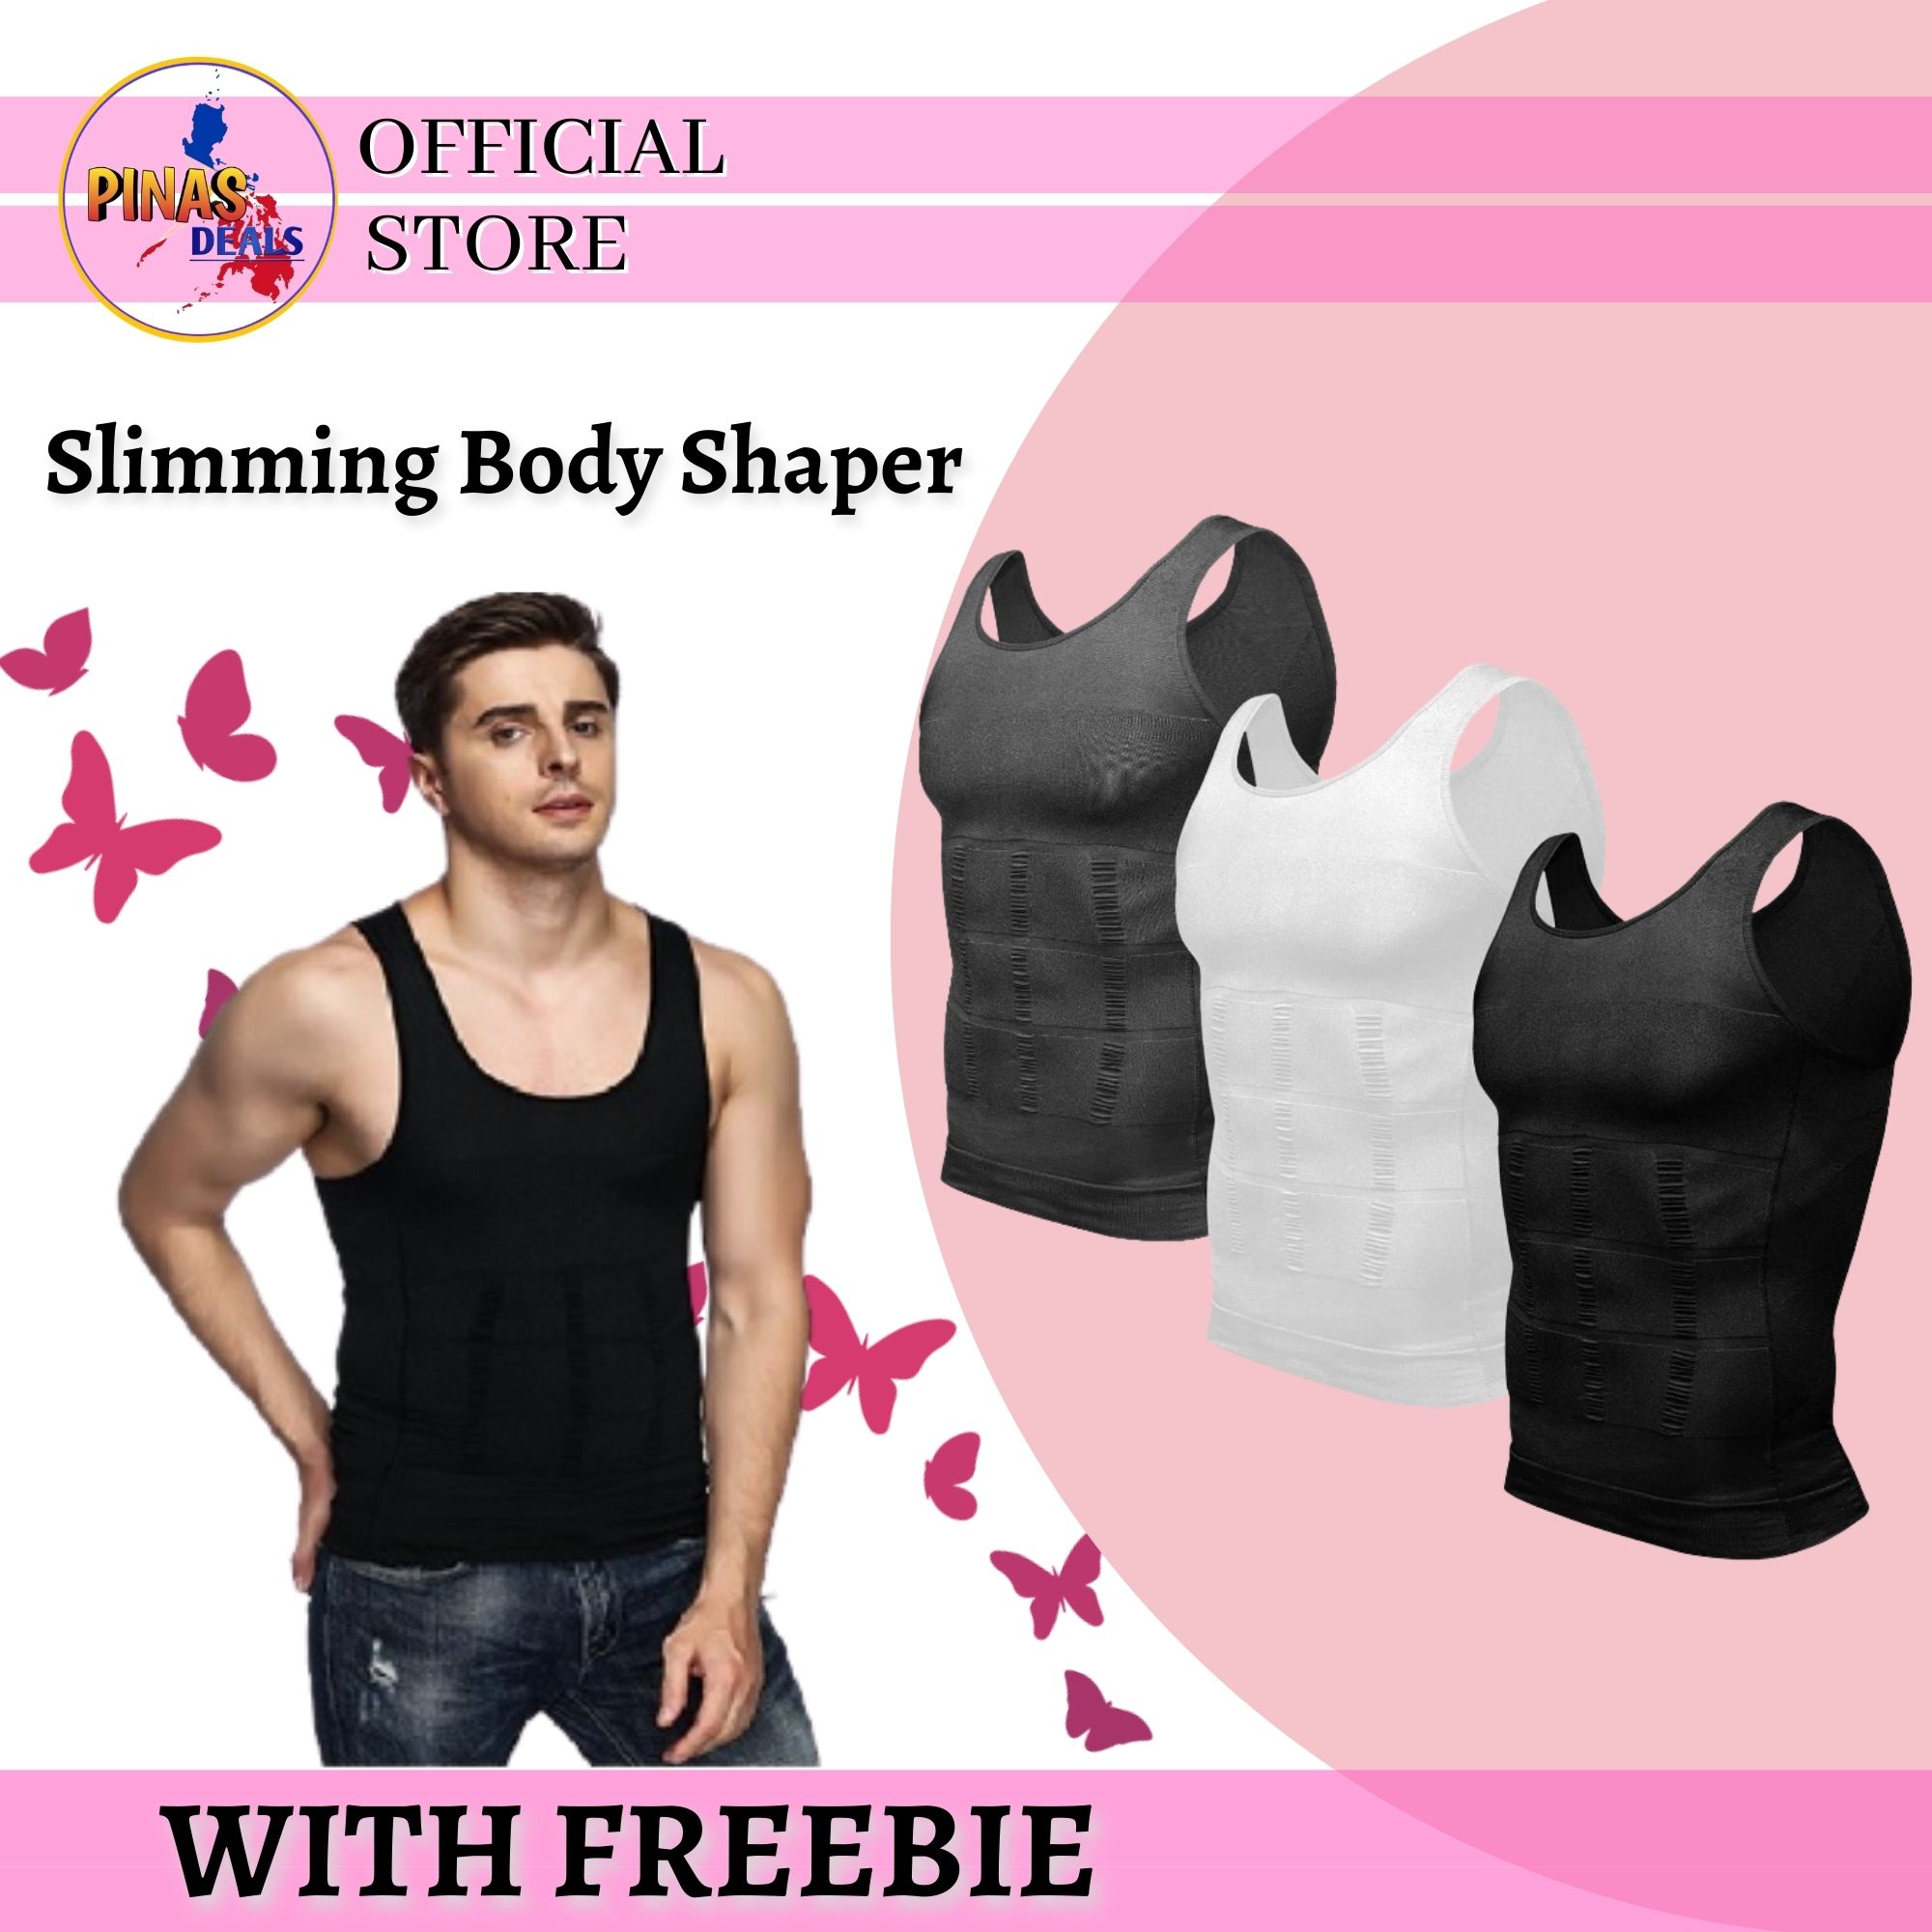 Body shaper Slim N Lift vests